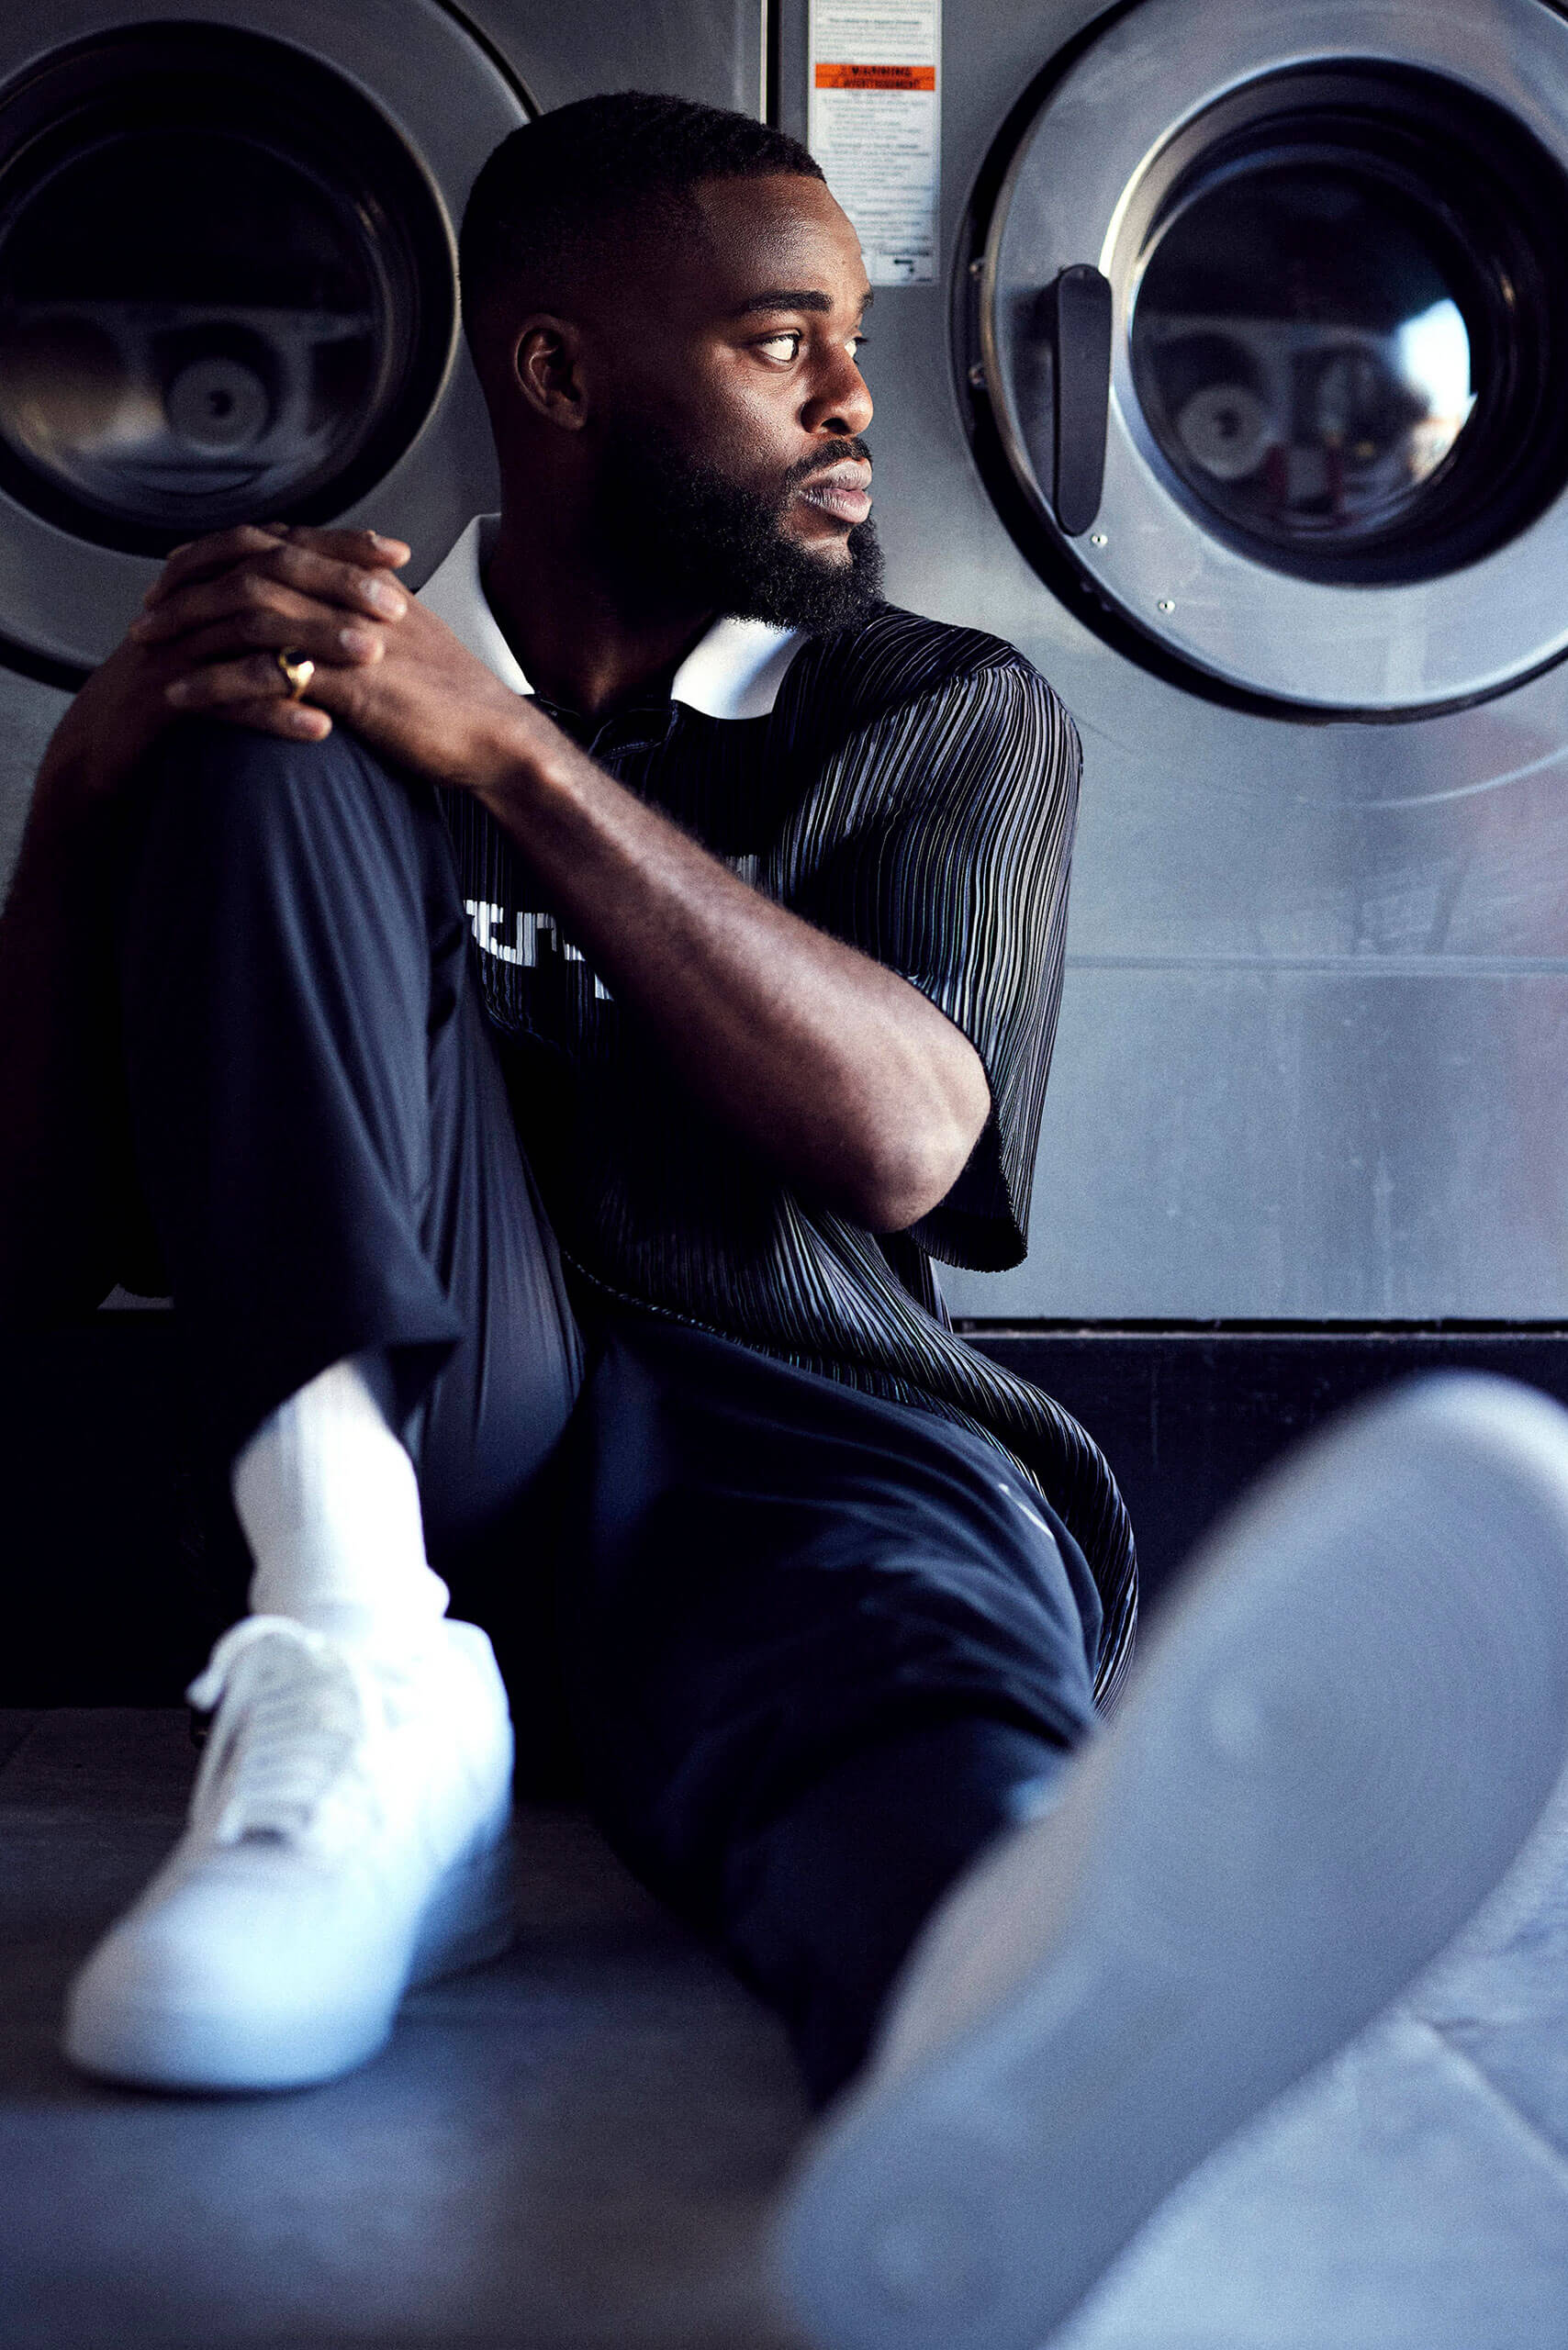 Joshua Buatsi sat on the floor under some clothes washing machines